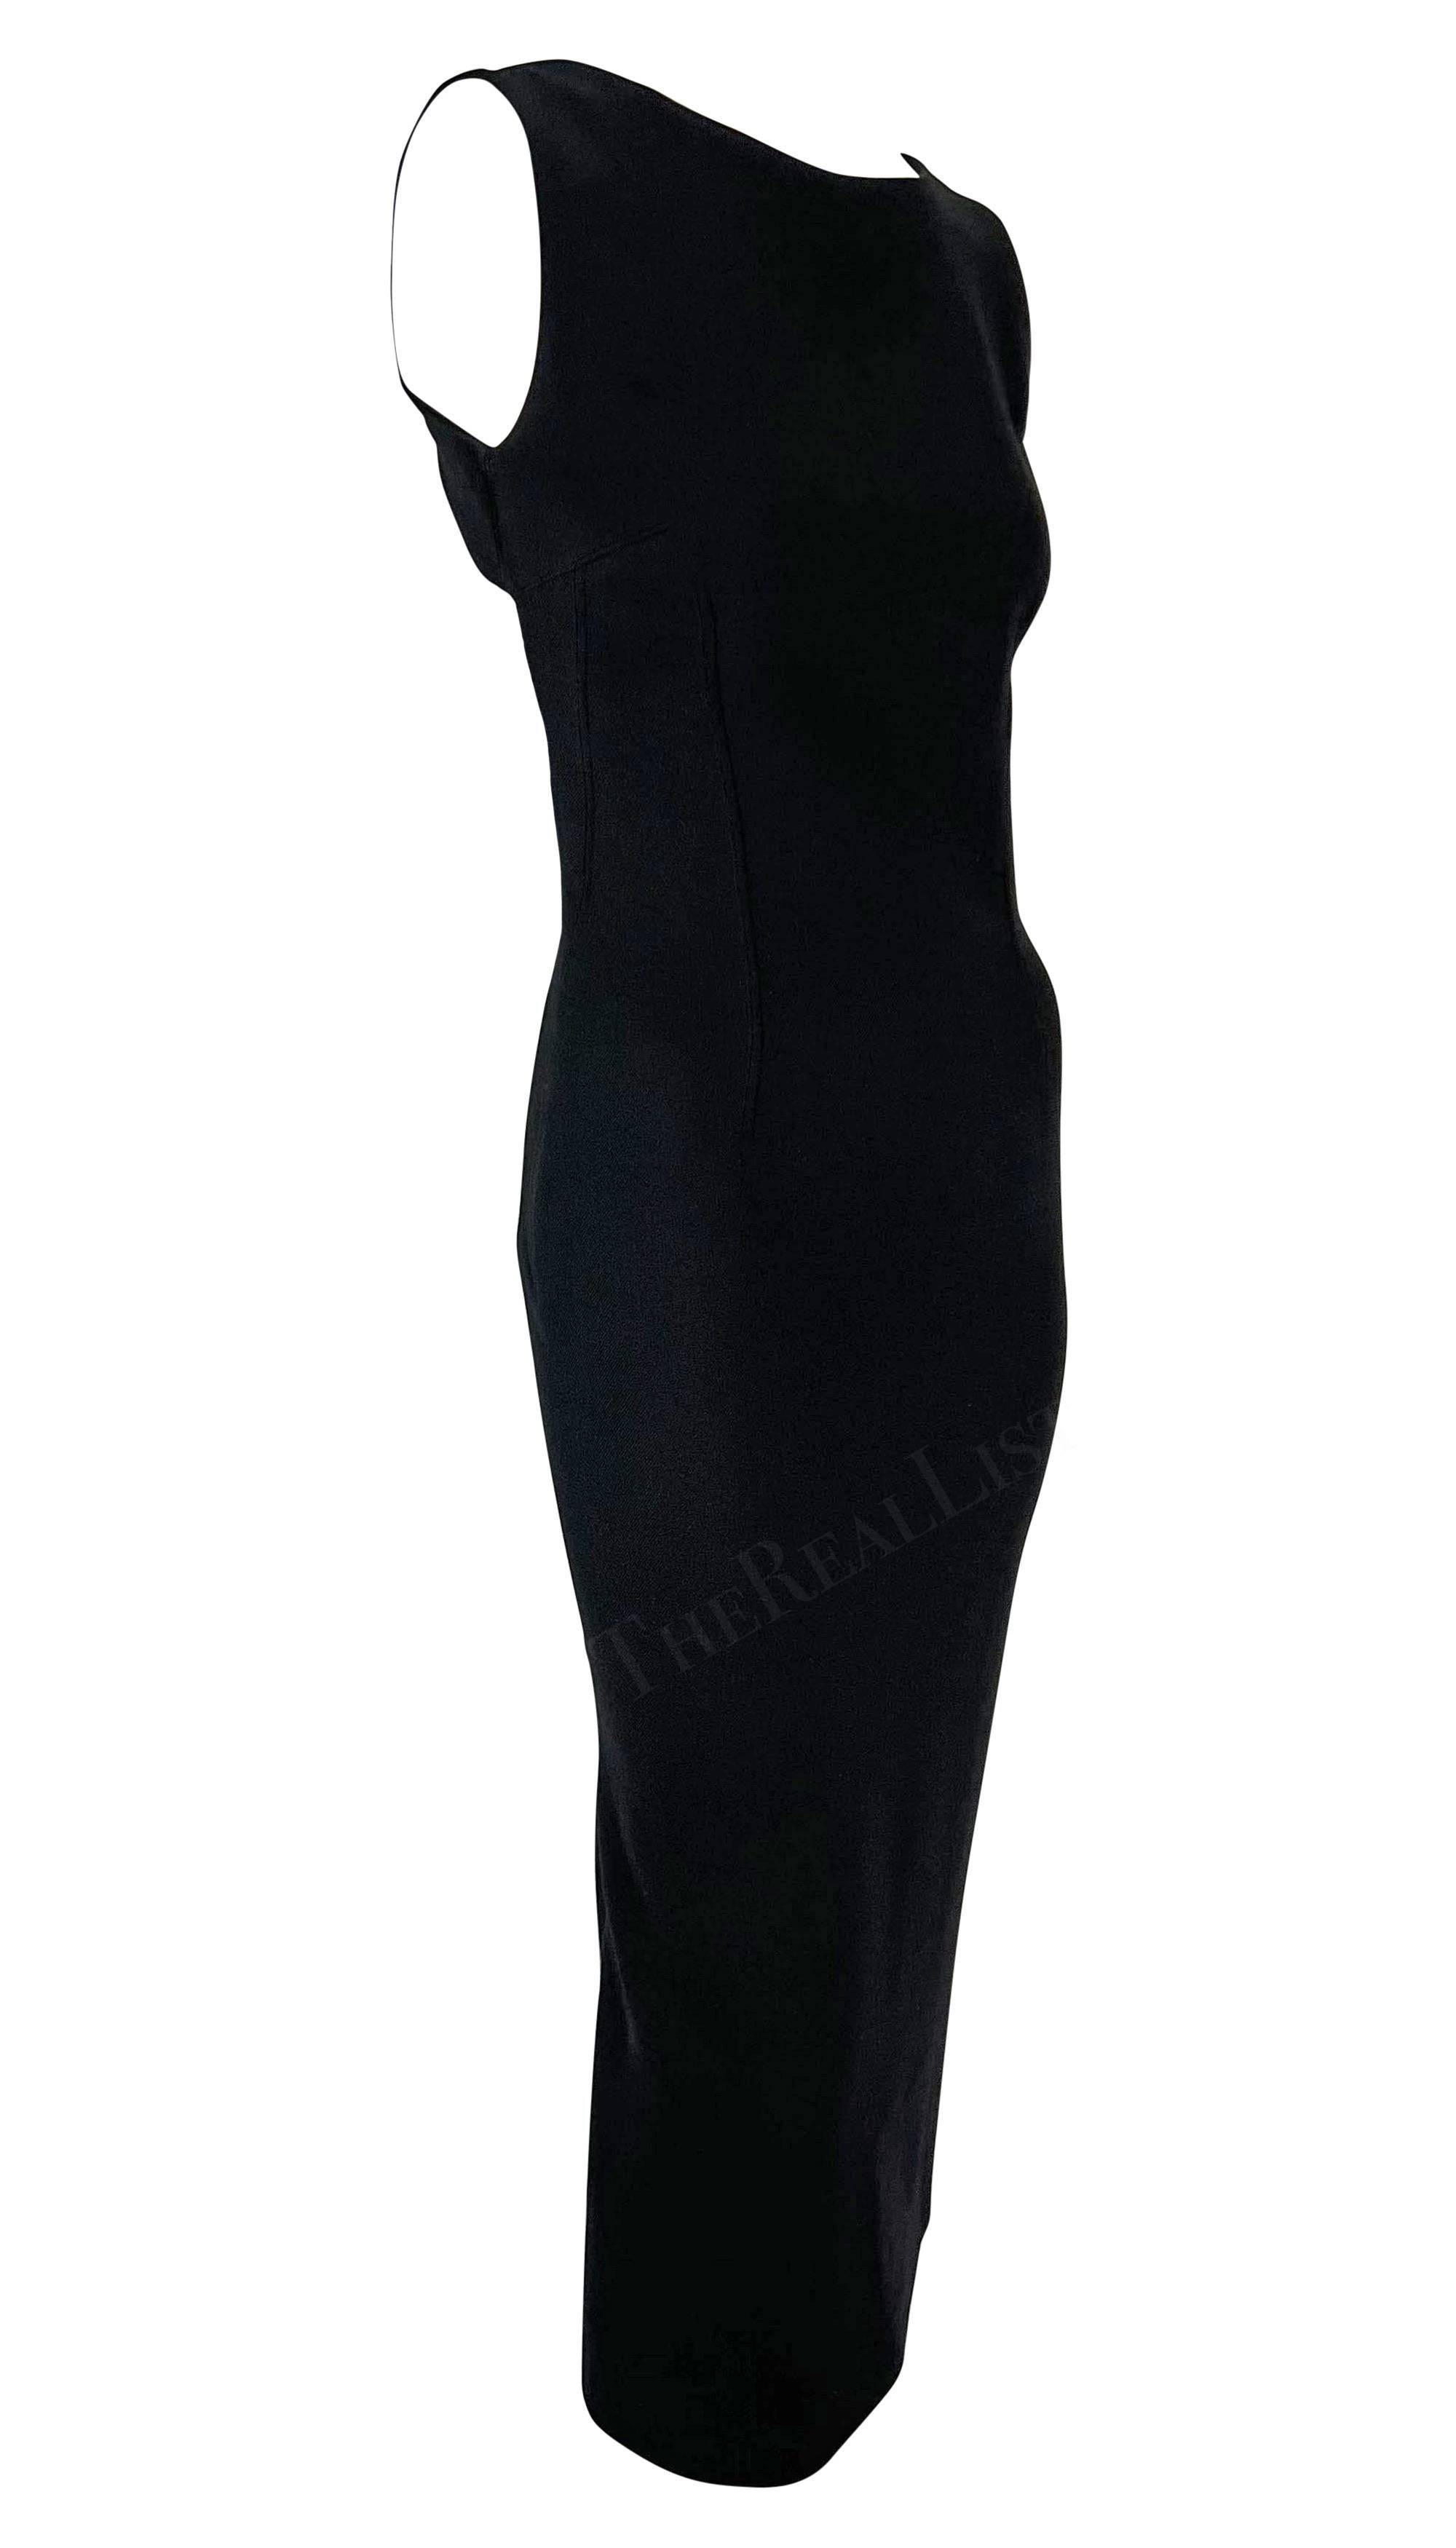 F/W 1998 Dolce & Gabbana Black Sleeveless Backless Runway Dress For Sale 2